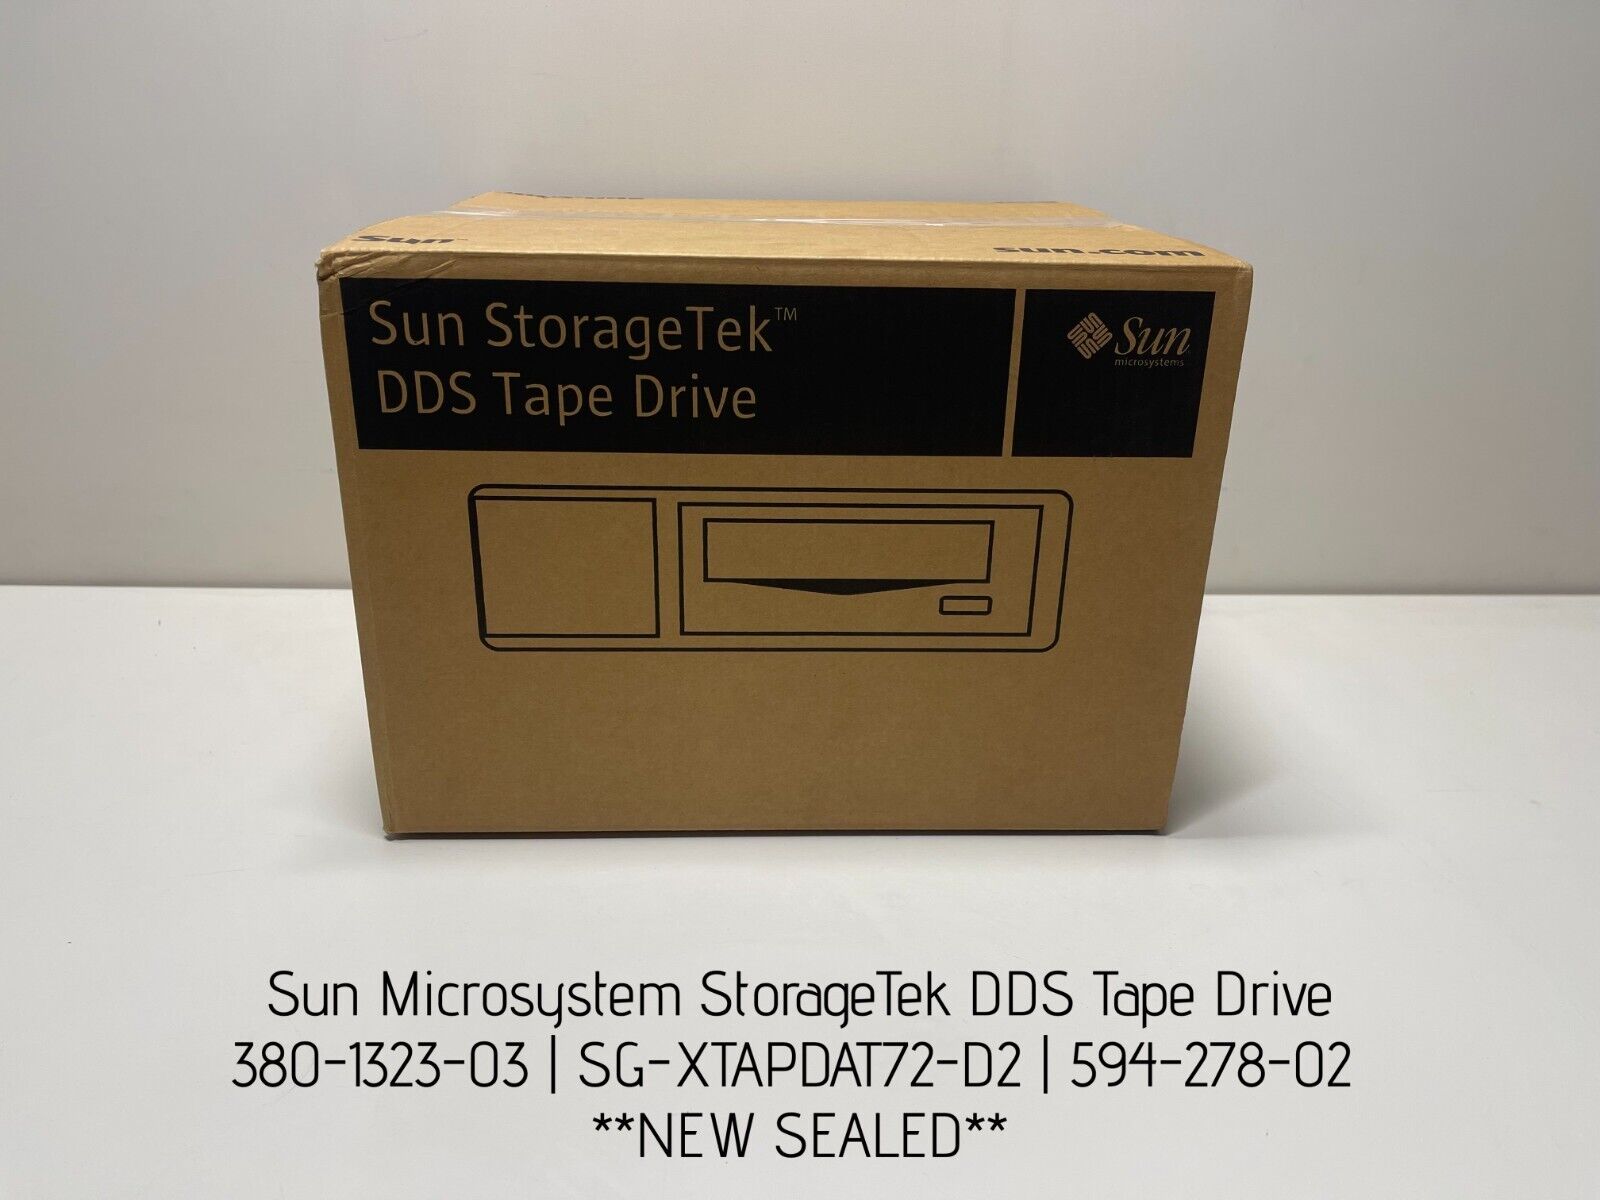 Sun Microsystem StorageTek DDS Tape Drive, 380-1323-03, SG-XTAPDAT72-D2 **NEW**